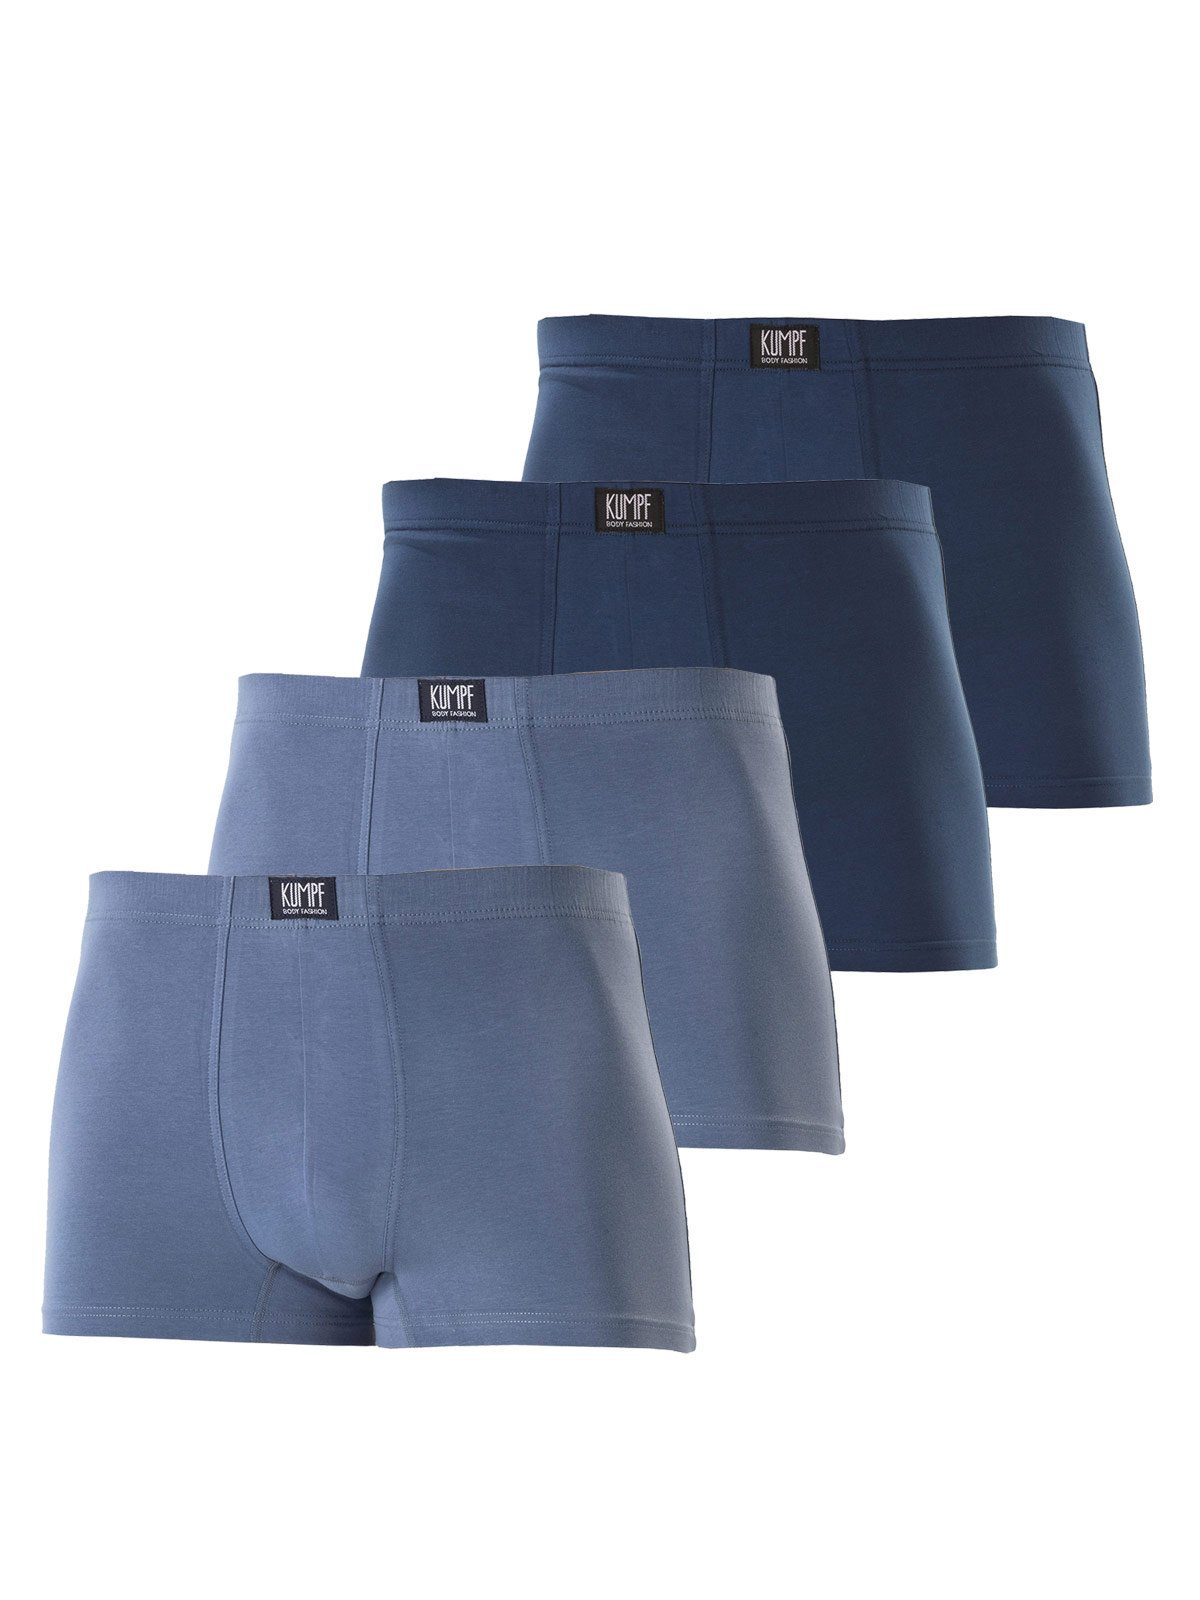 KUMPF Retro Pants 4er Sparpack darkblue Pants (Spar-Set, 4-St) Bio stahl Herren Cotton hohe Markenqualität